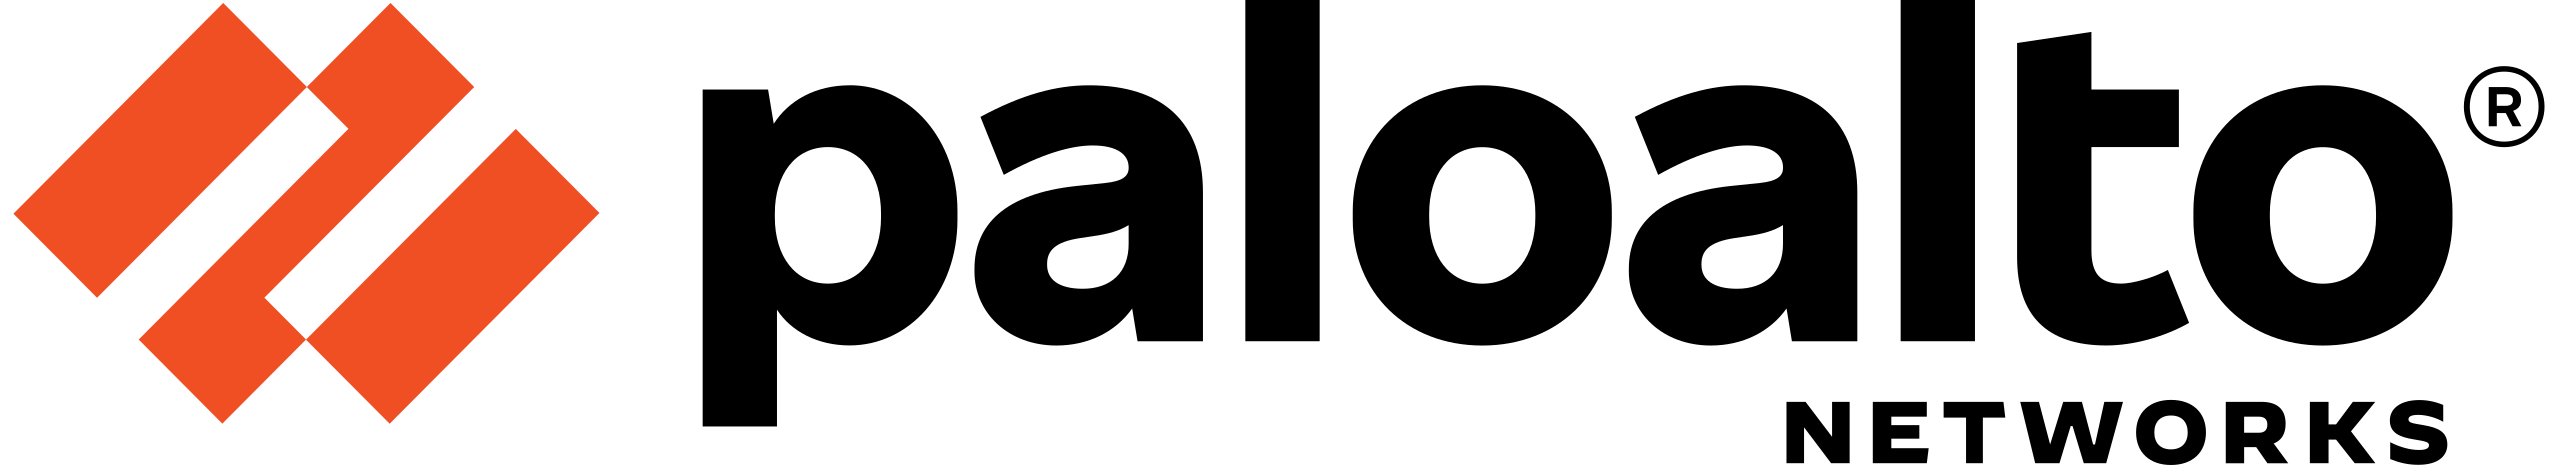 Palo Alto networks logo